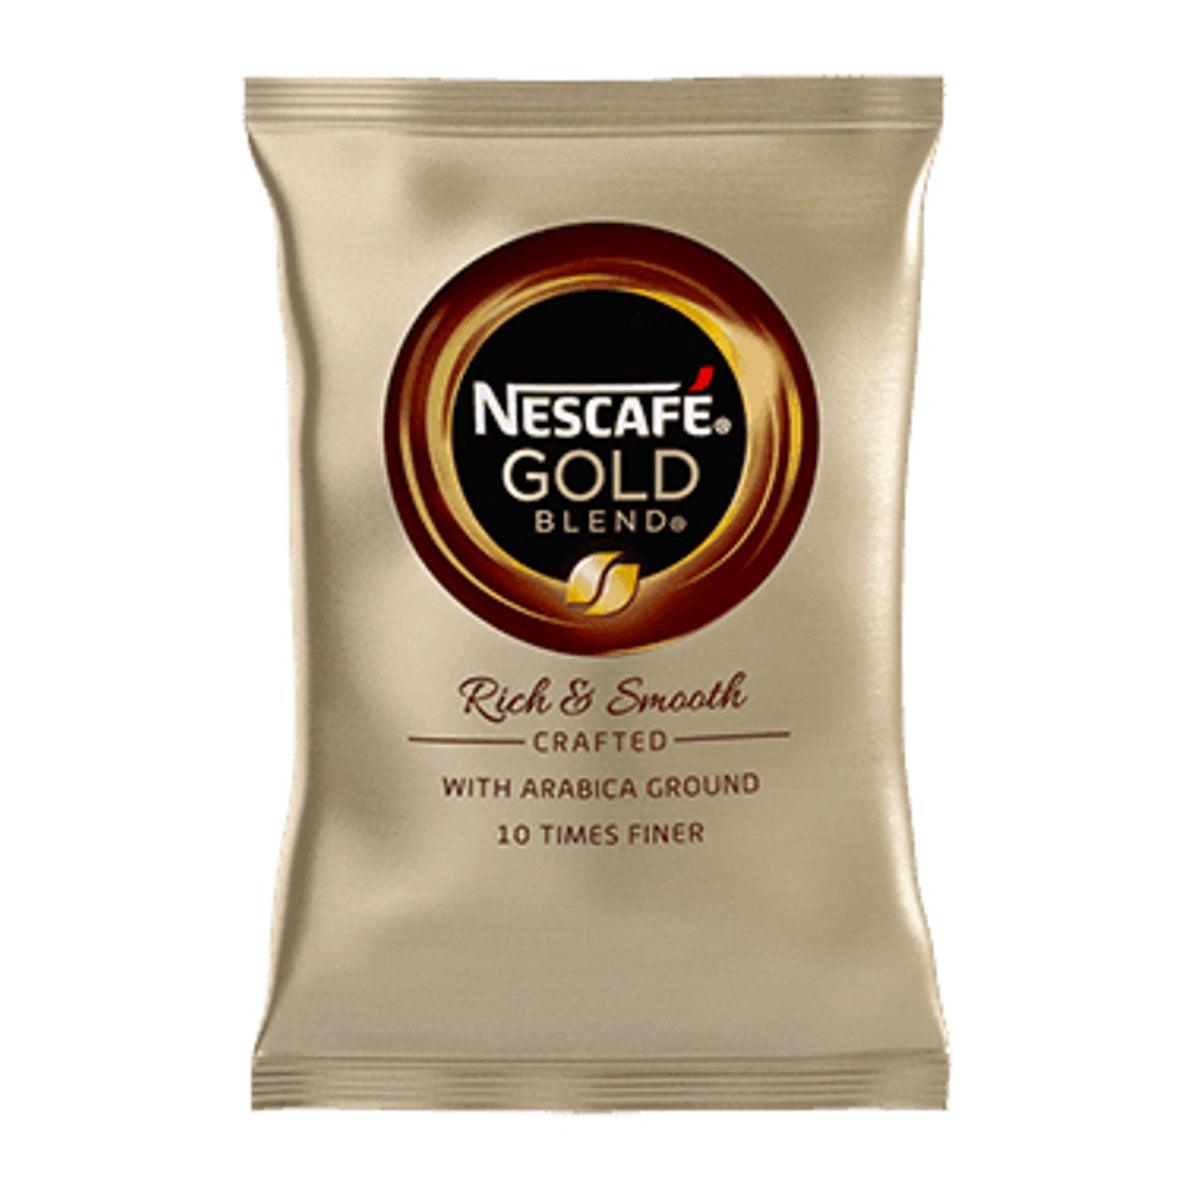 Nescafe Gold Blend Vending Coffee - 300g Bag - Vending Superstore